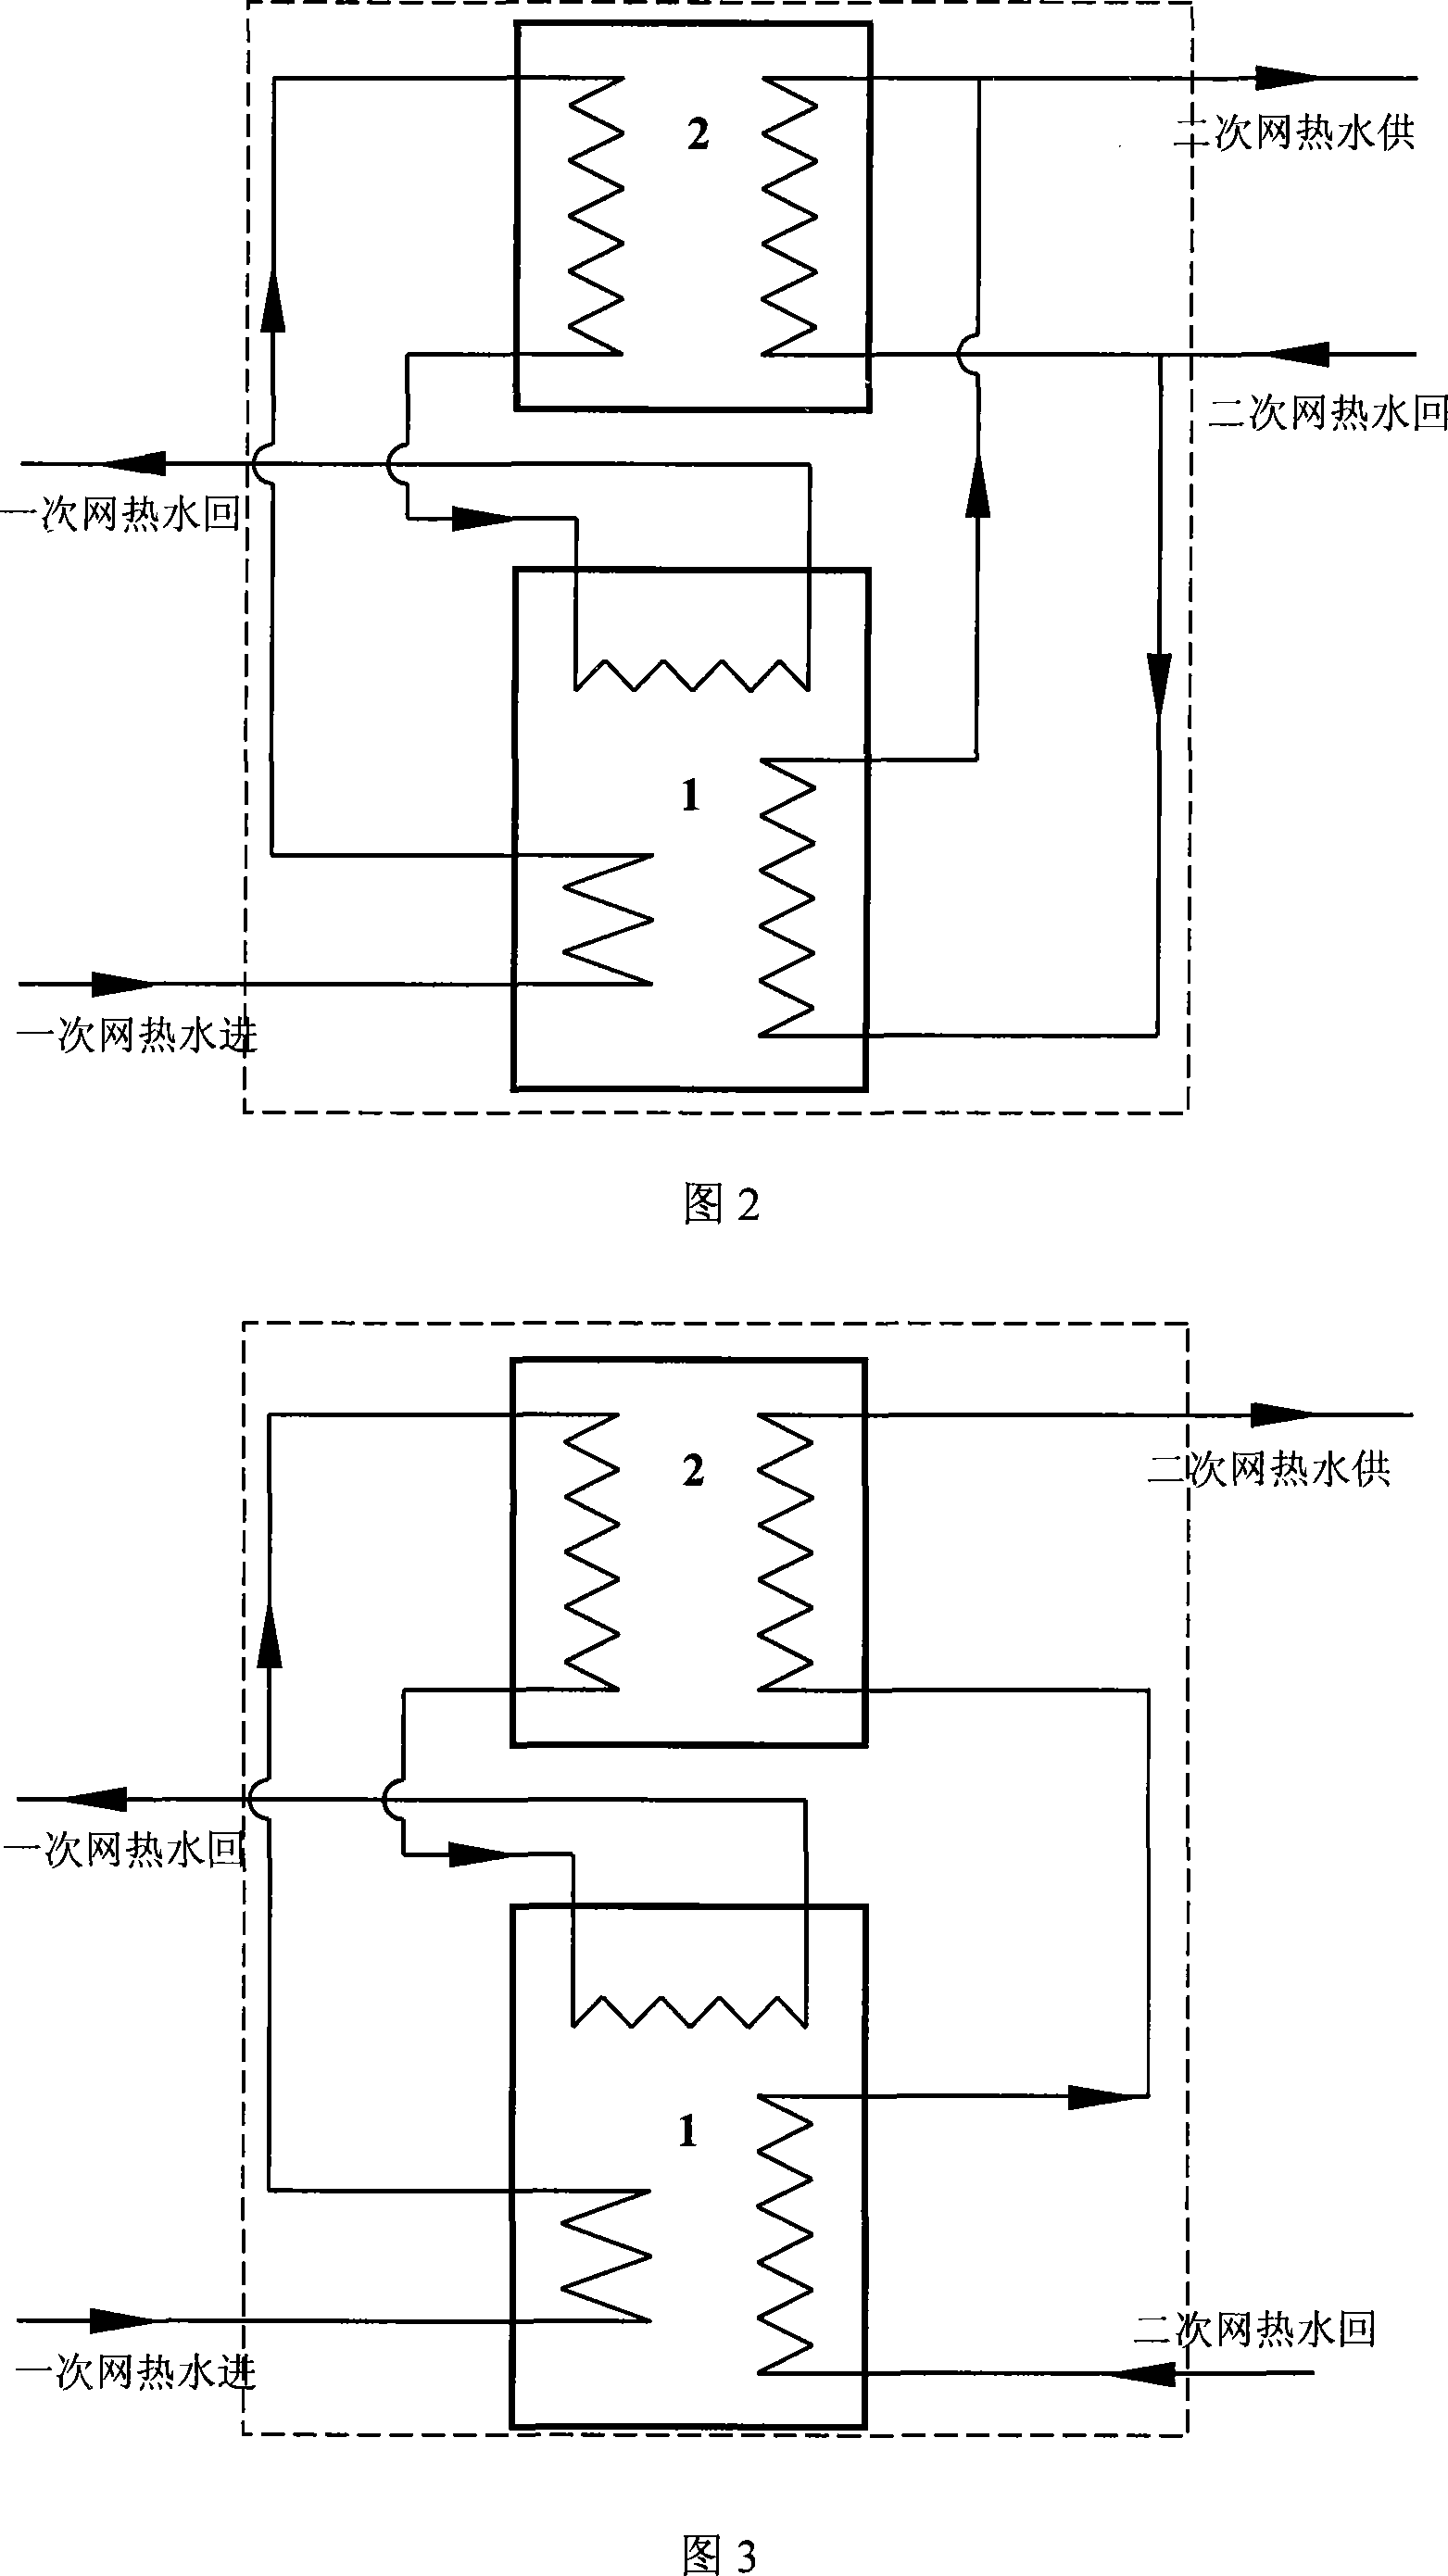 Heat pump type heat exchanging unit